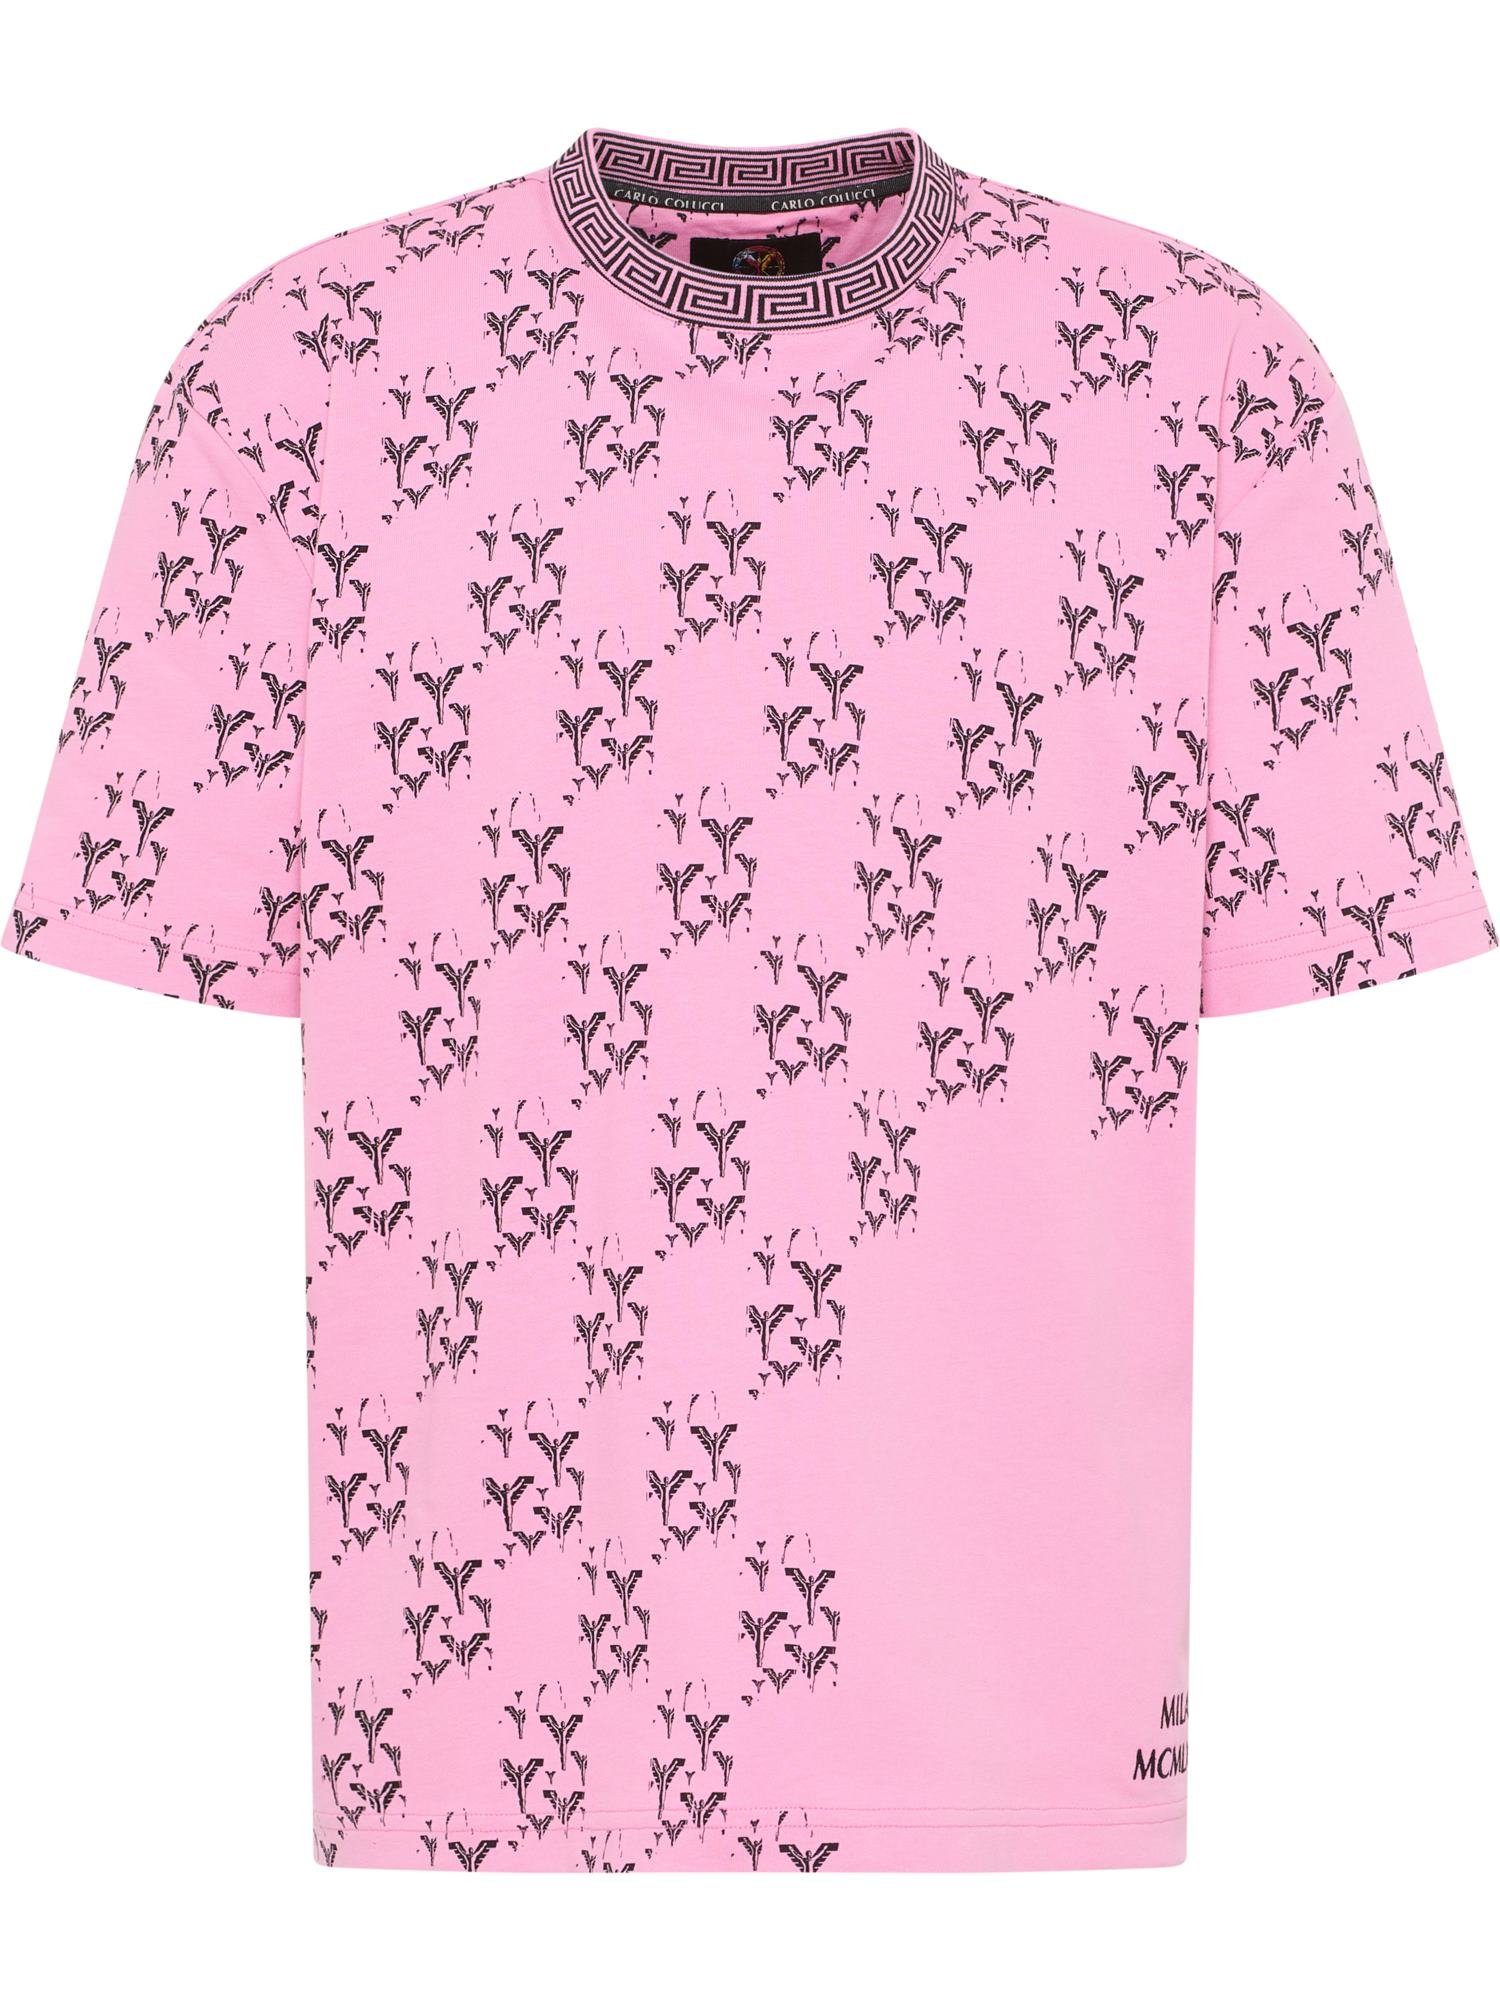 CARLO Paoli T-Shirt COLUCCI De Rosa